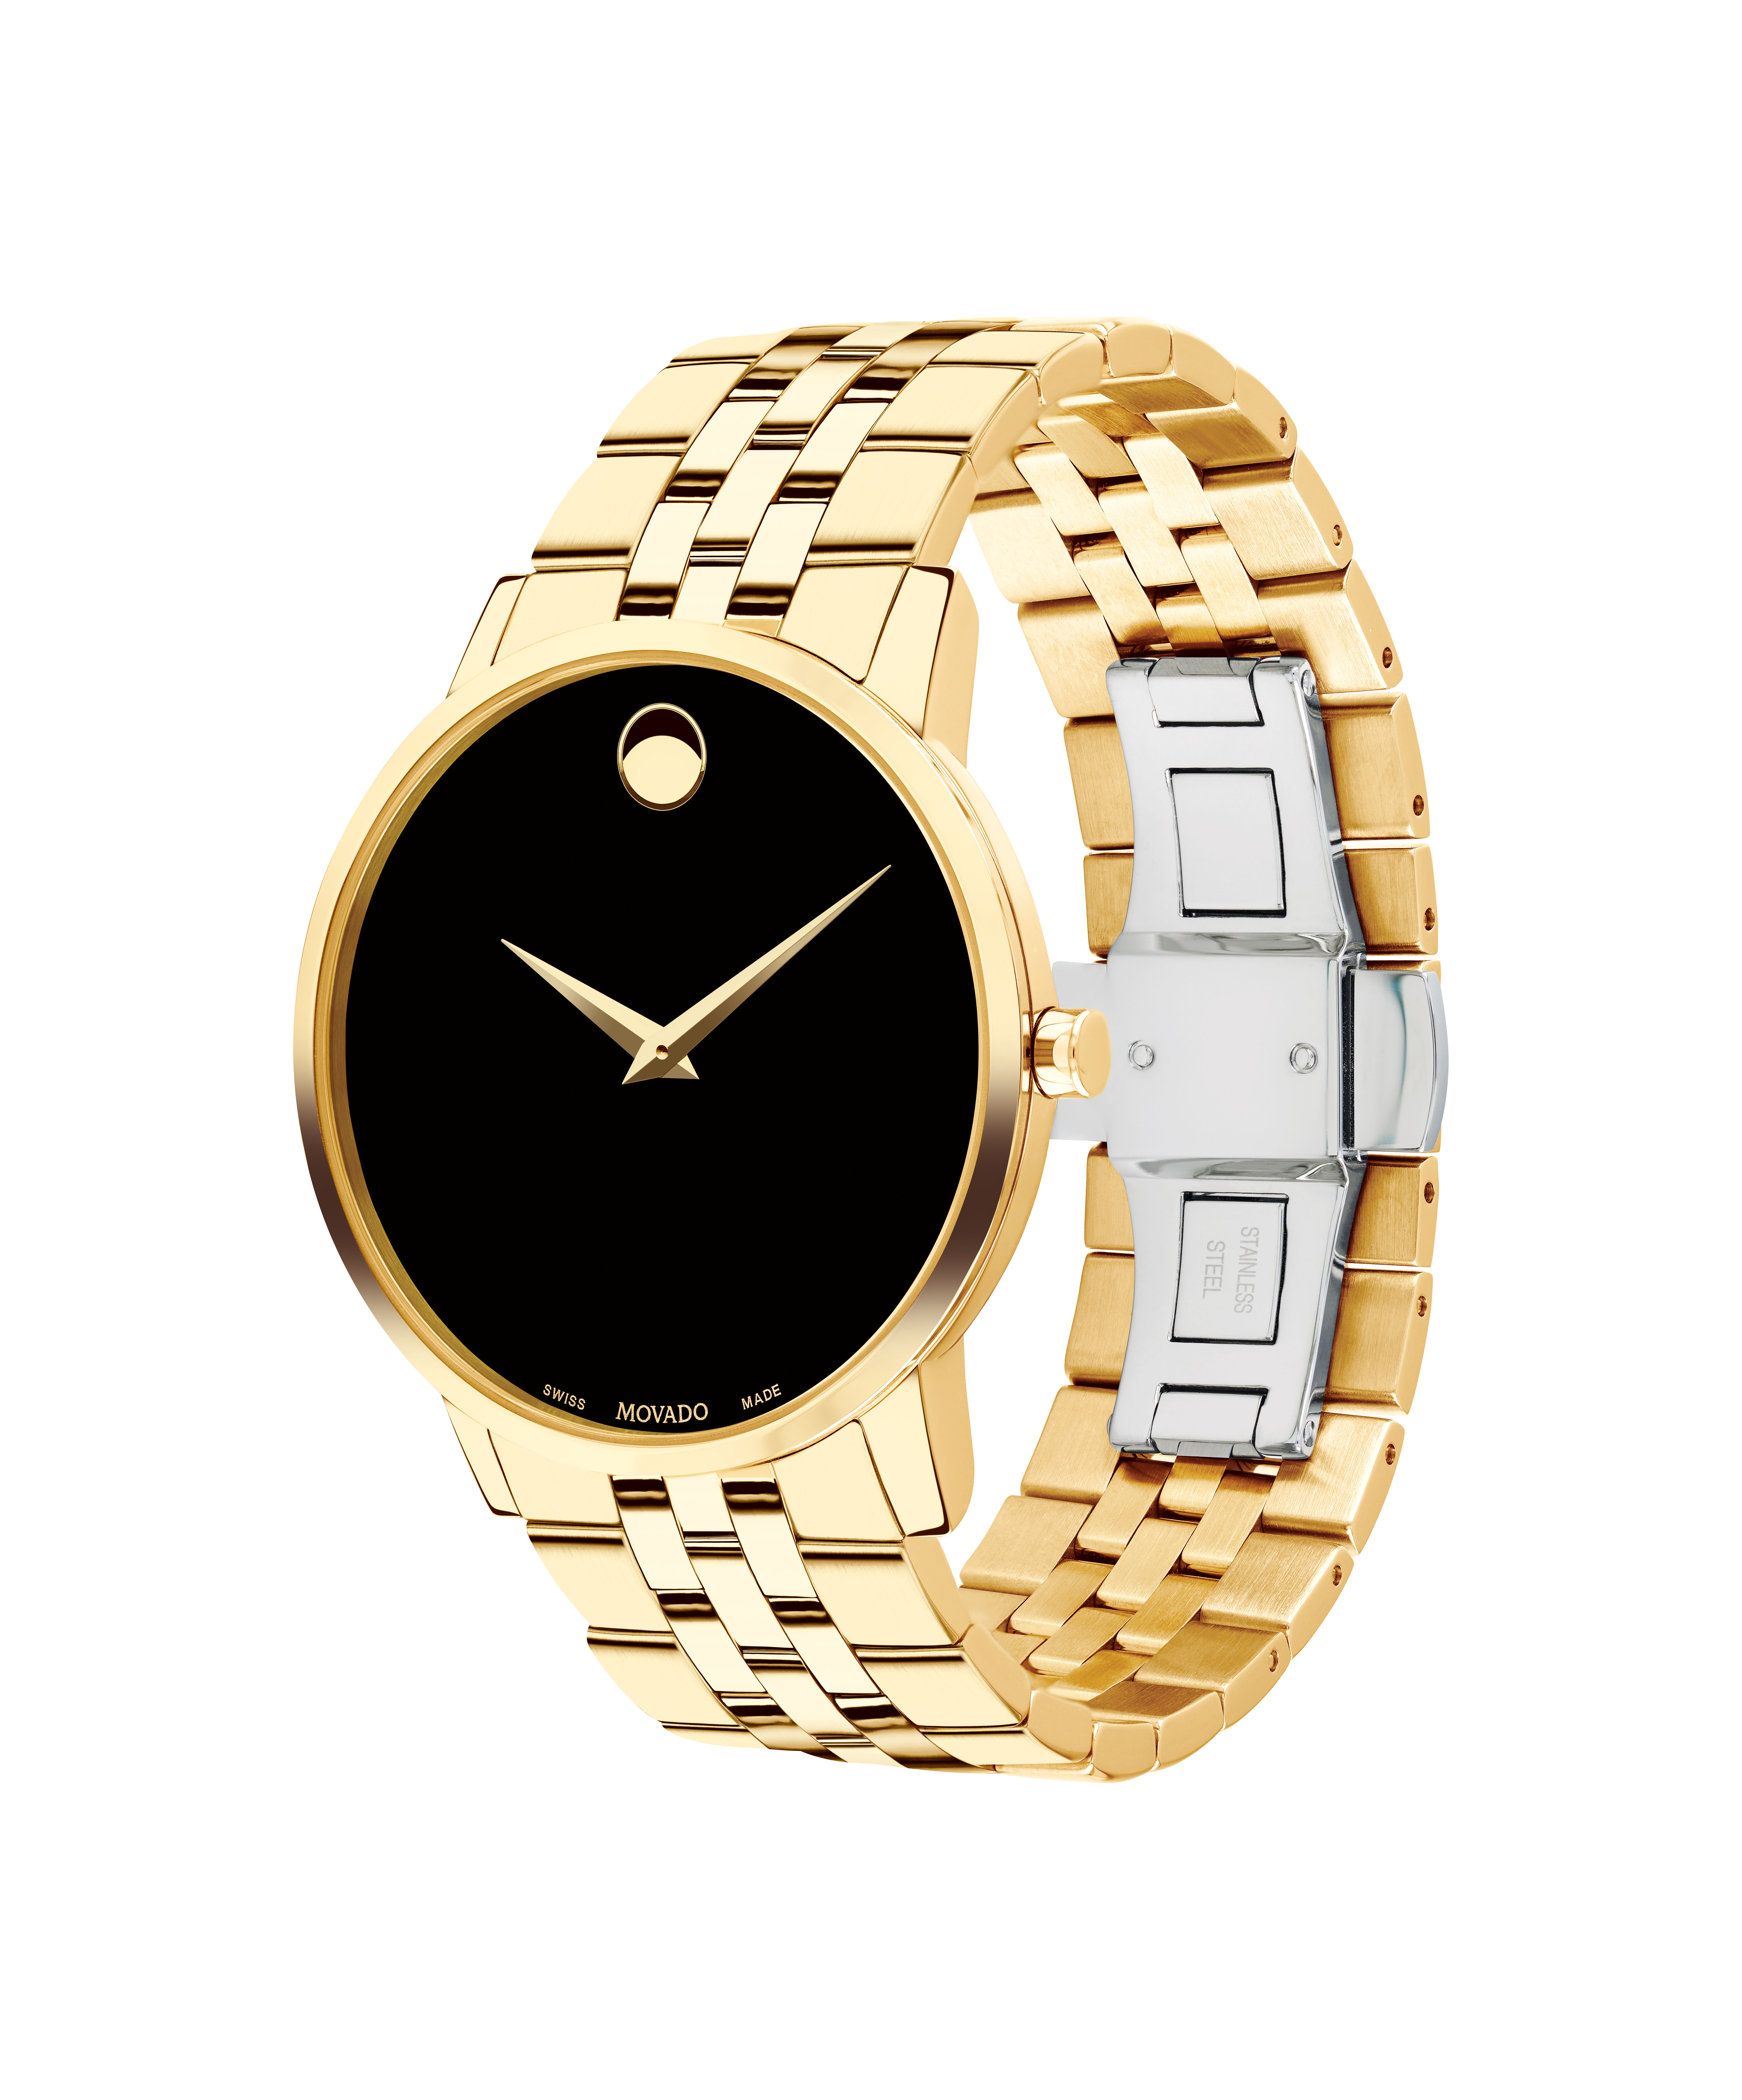 Movado Ladies 86.36.816.02 Stainless Steel Bracelet Quartz Watch